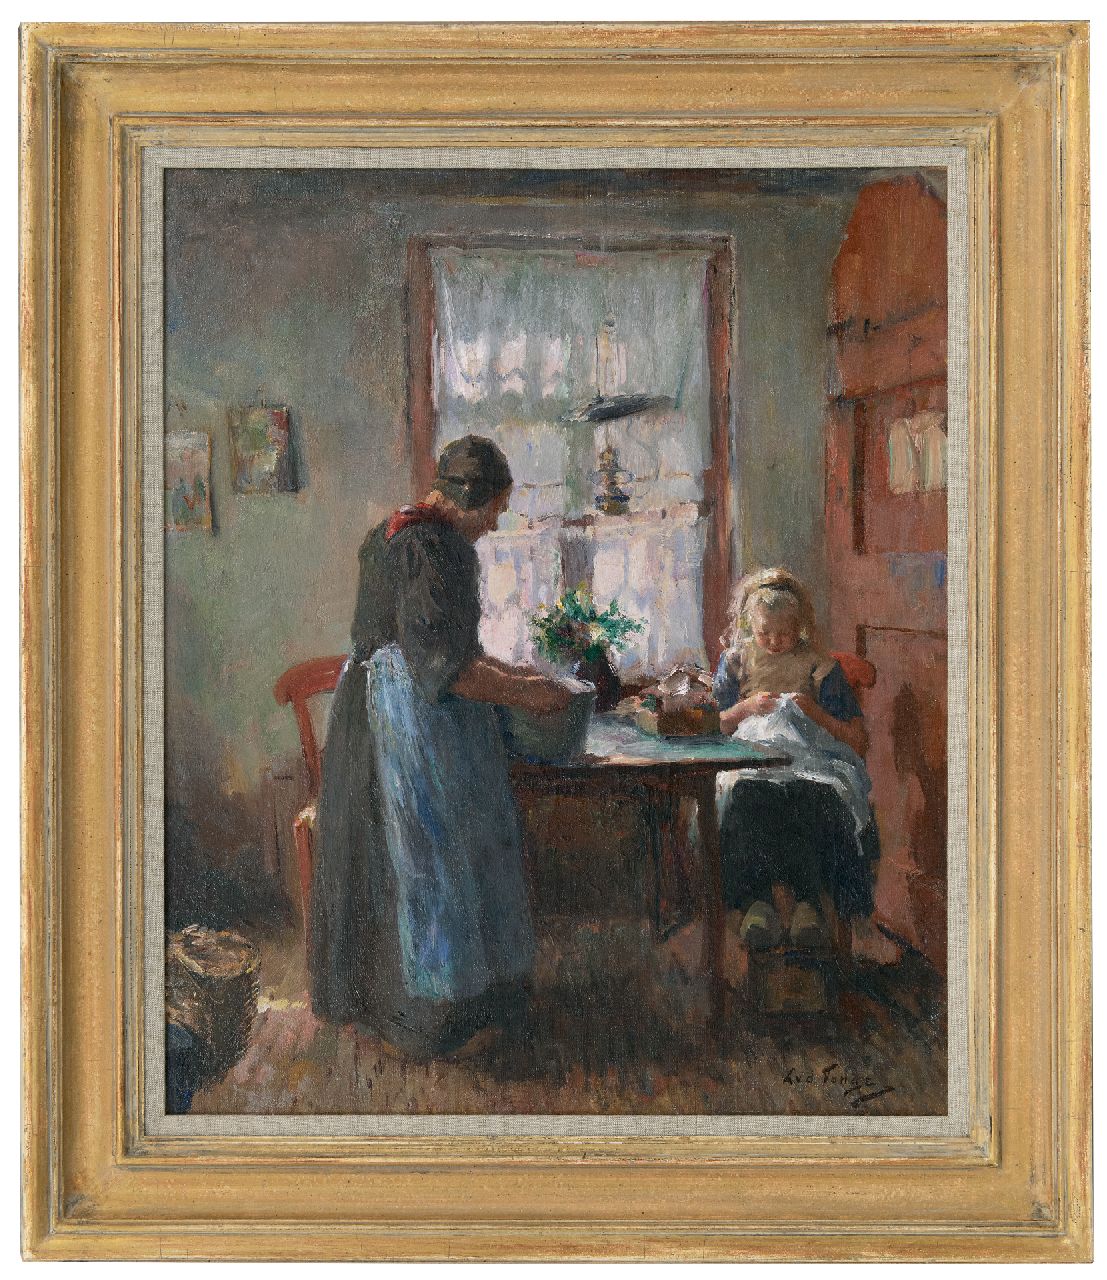 Tonge L.L. van der | 'Lammert' Leire van der Tonge | Paintings offered for sale | Girl at her needelwork in farmhouse interior in Laren, oil on canvas 54.3 x 45.2 cm, signed l.r.